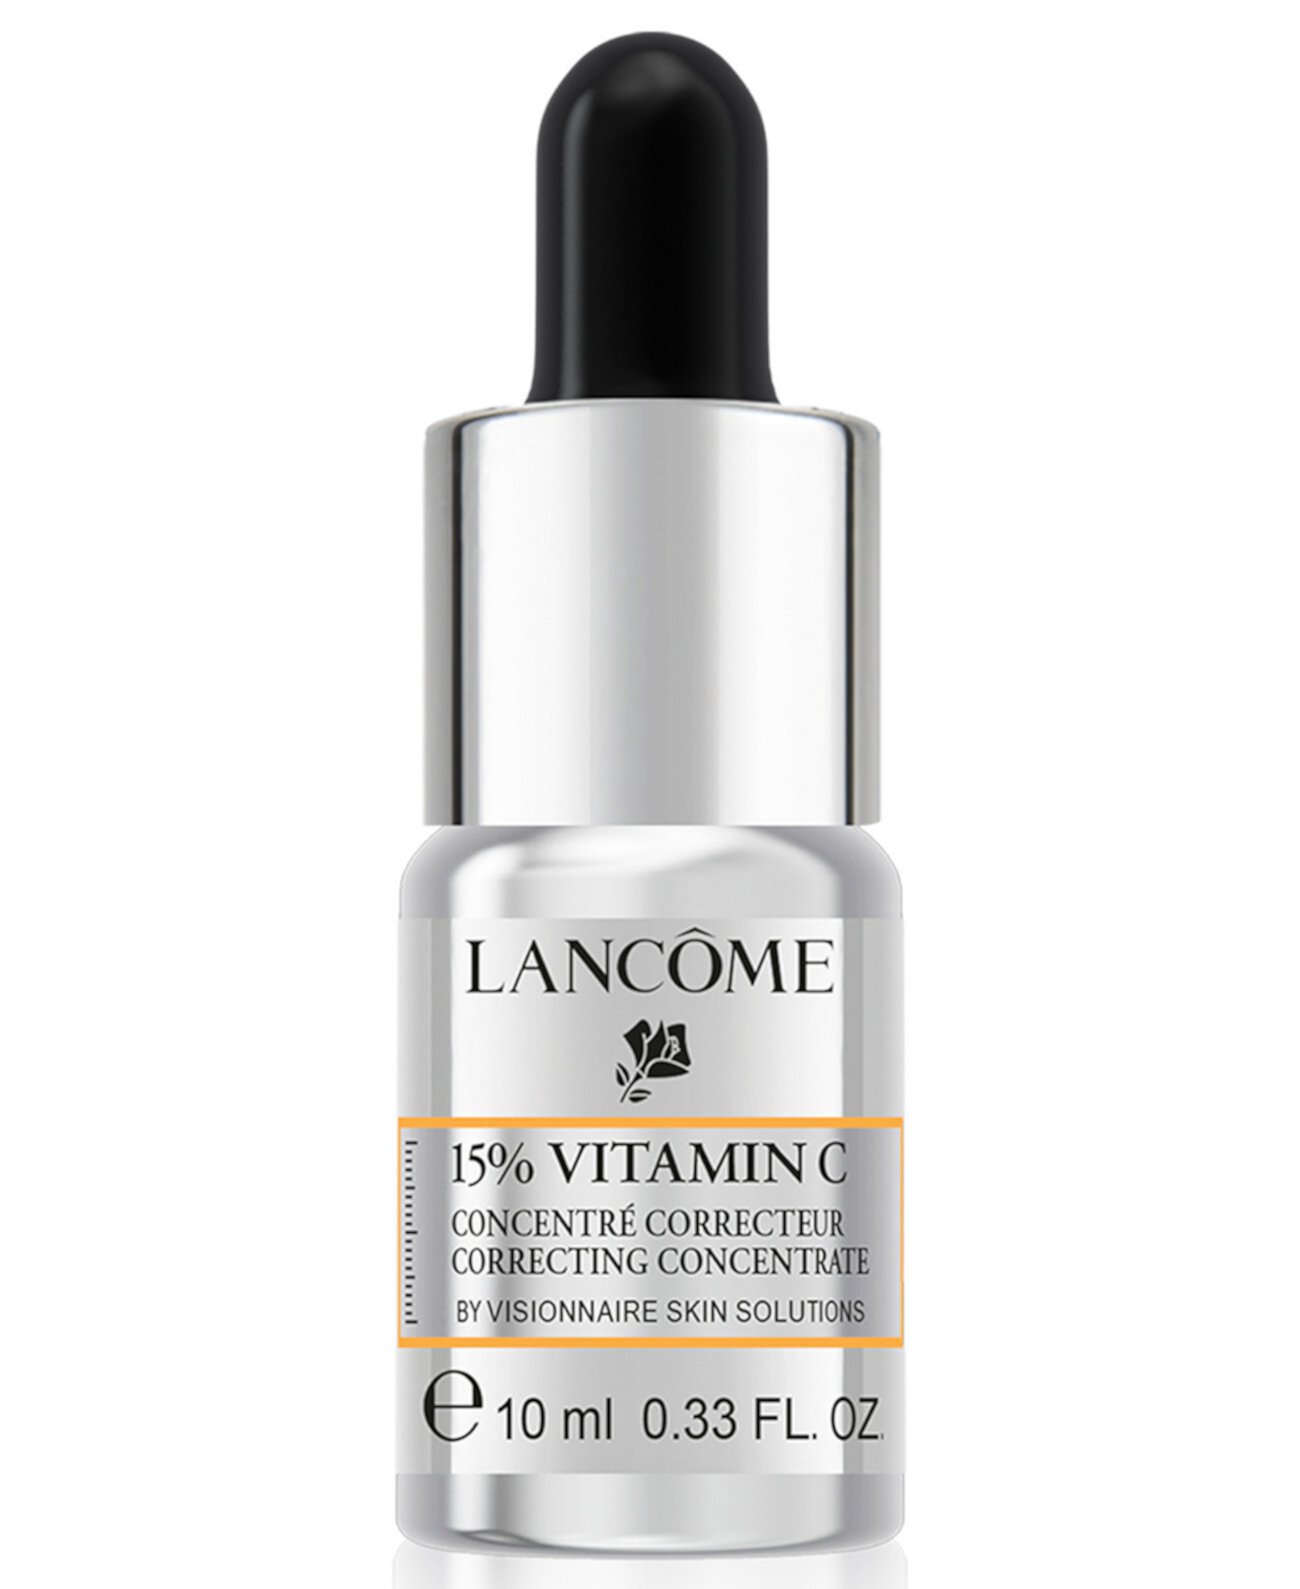 Visionnaire Skin Solutions 15% корректирующий концентрат витамина С Lancome